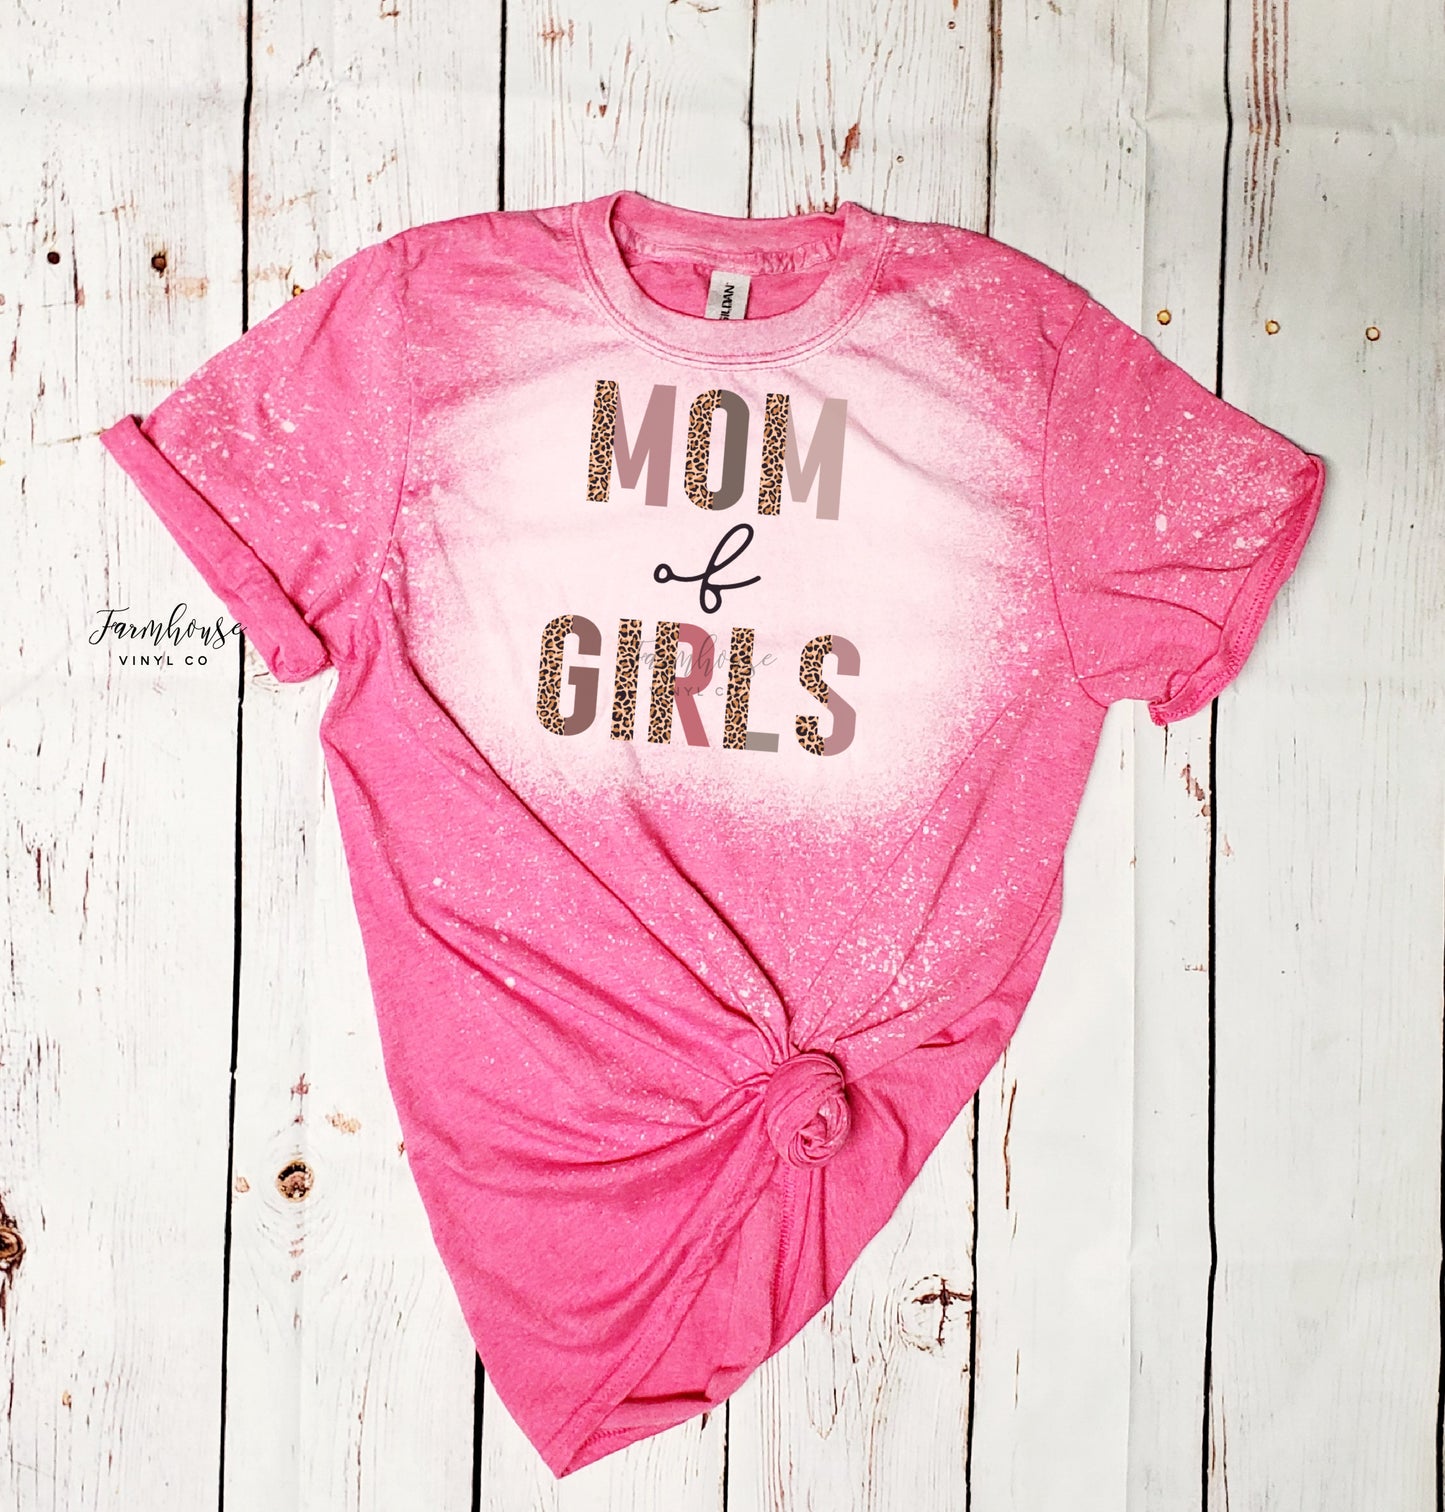 Mom of Girls Bleached Shirt - Farmhouse Vinyl Co